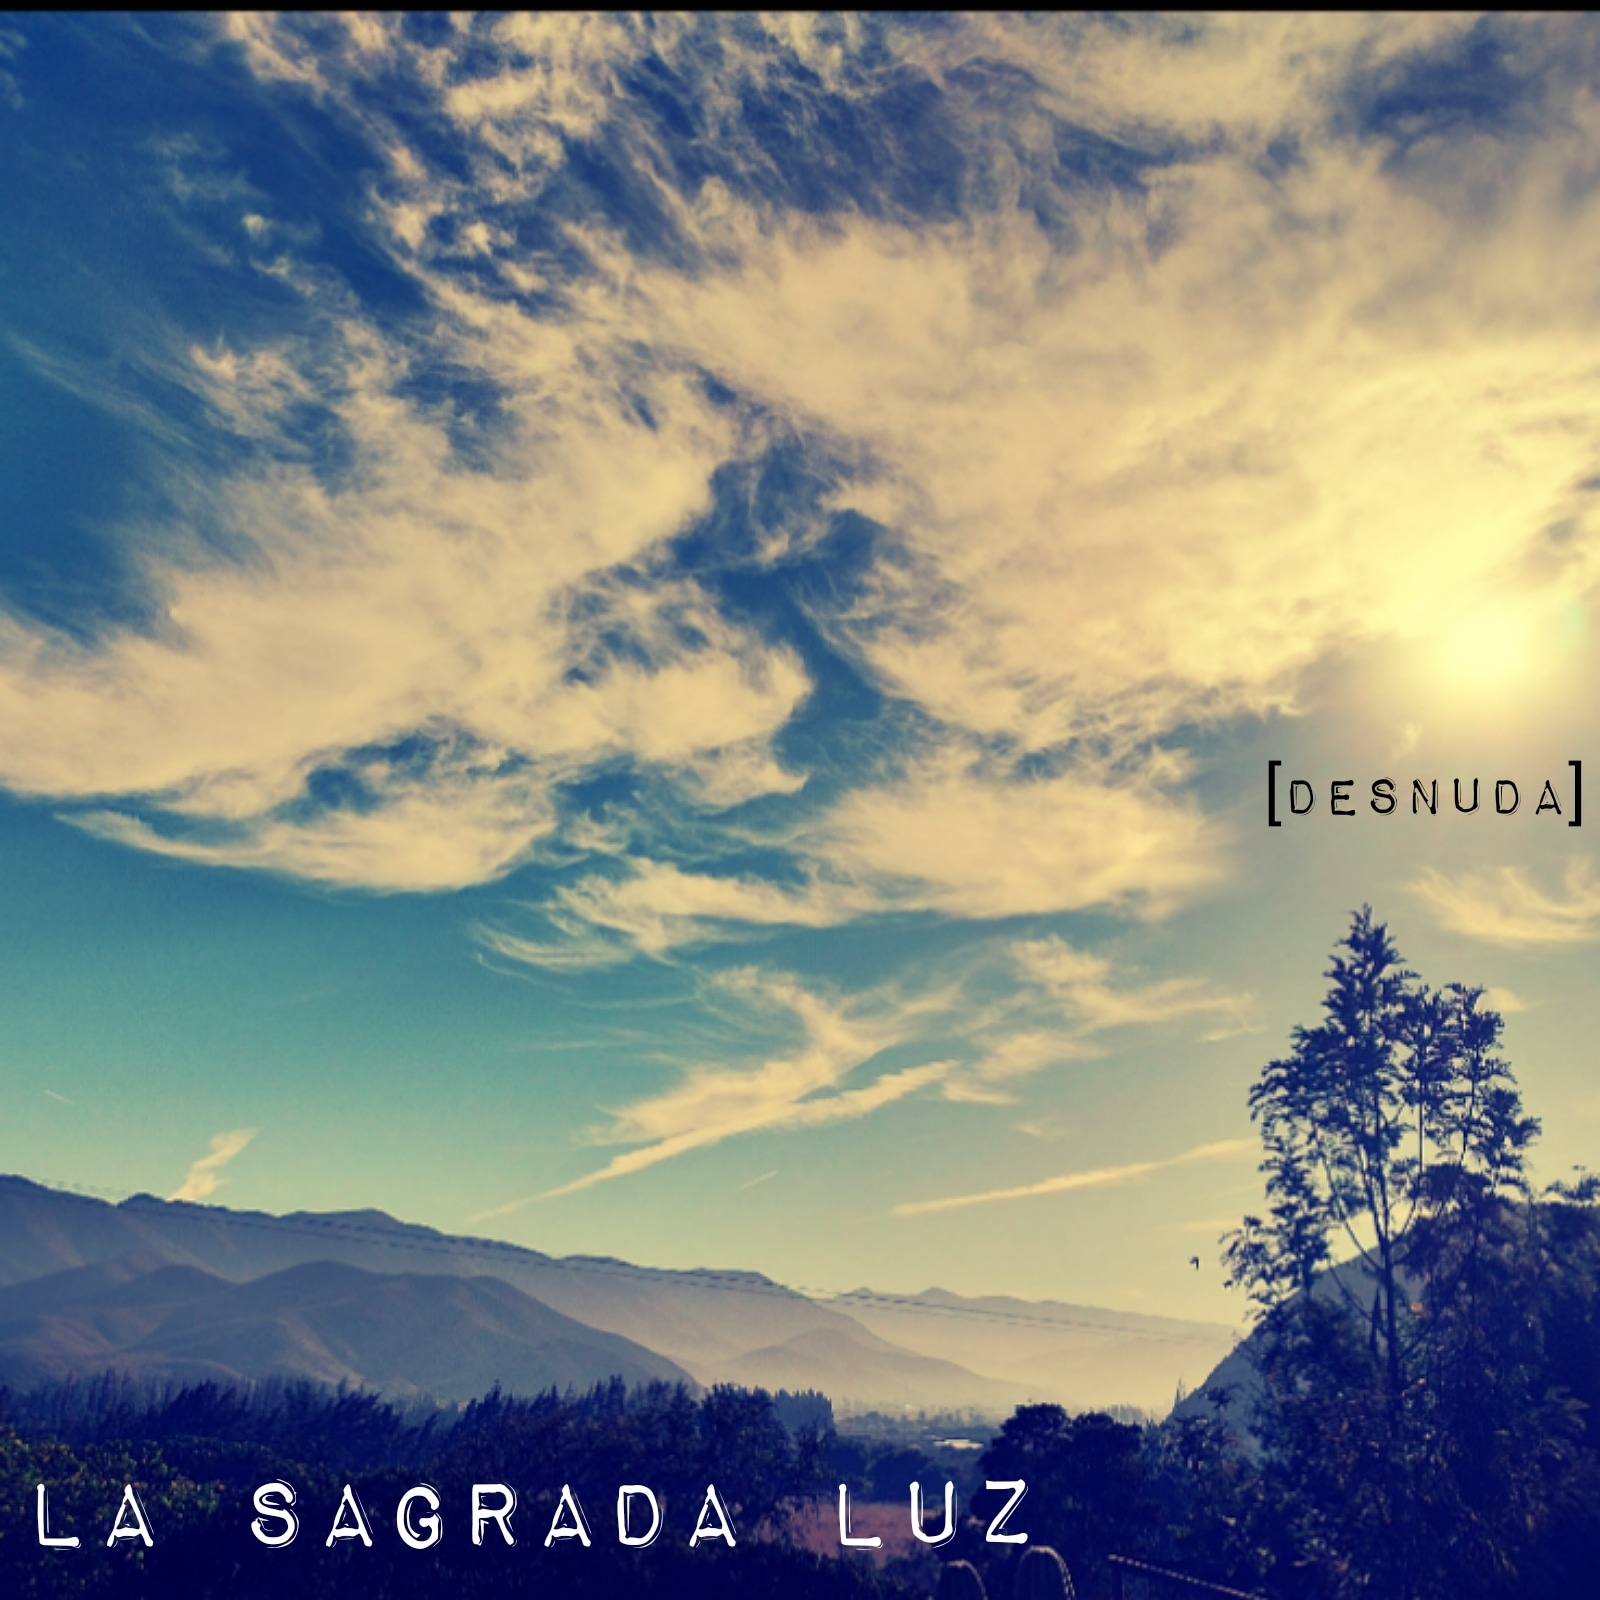  Escucha el álbum “La Sagrada Luz (Desnuda)” de Massimiliano Avi (Plácida Sonrisa)